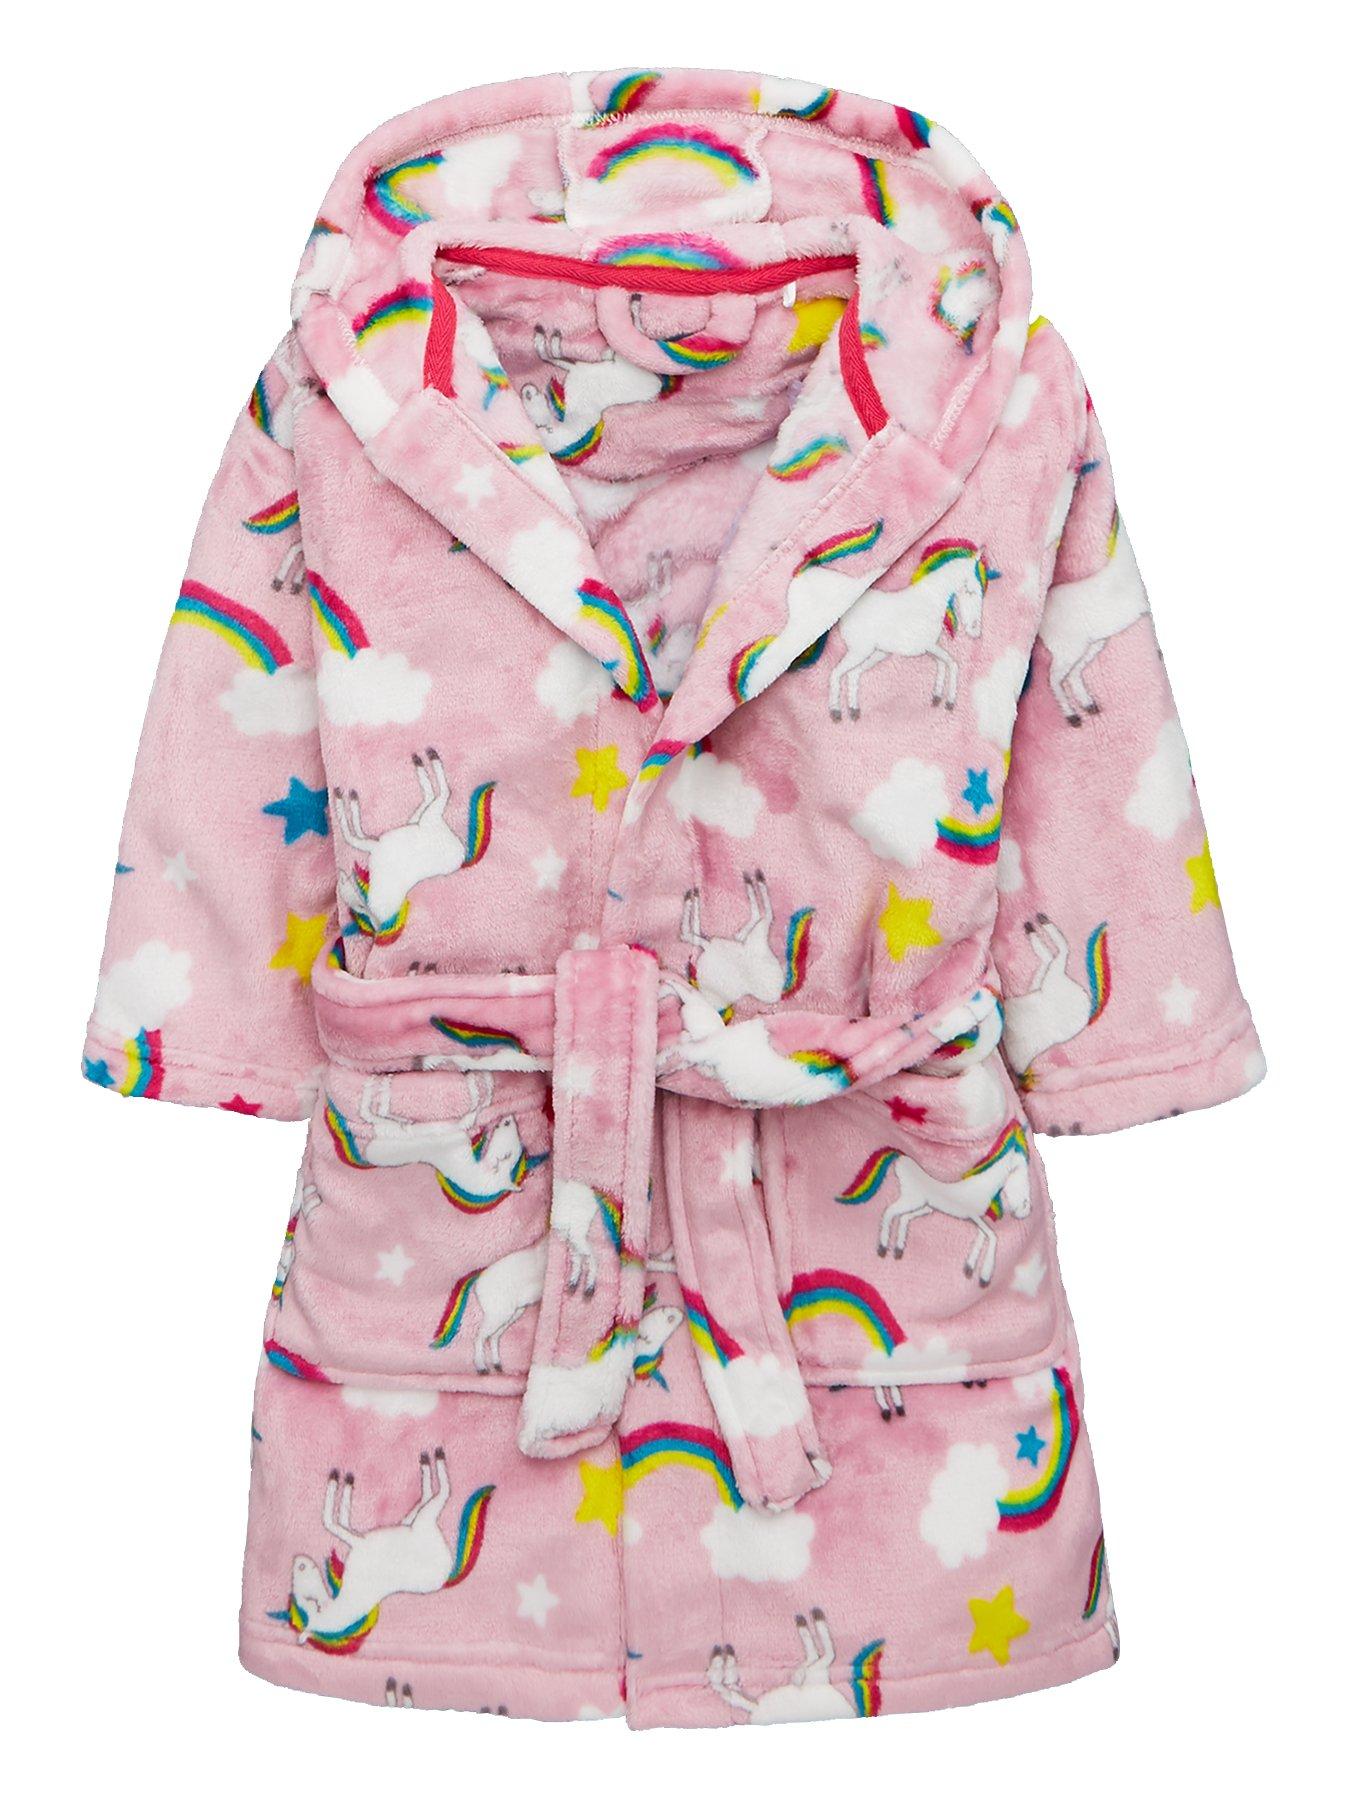 rainbow unicorn dressing gown